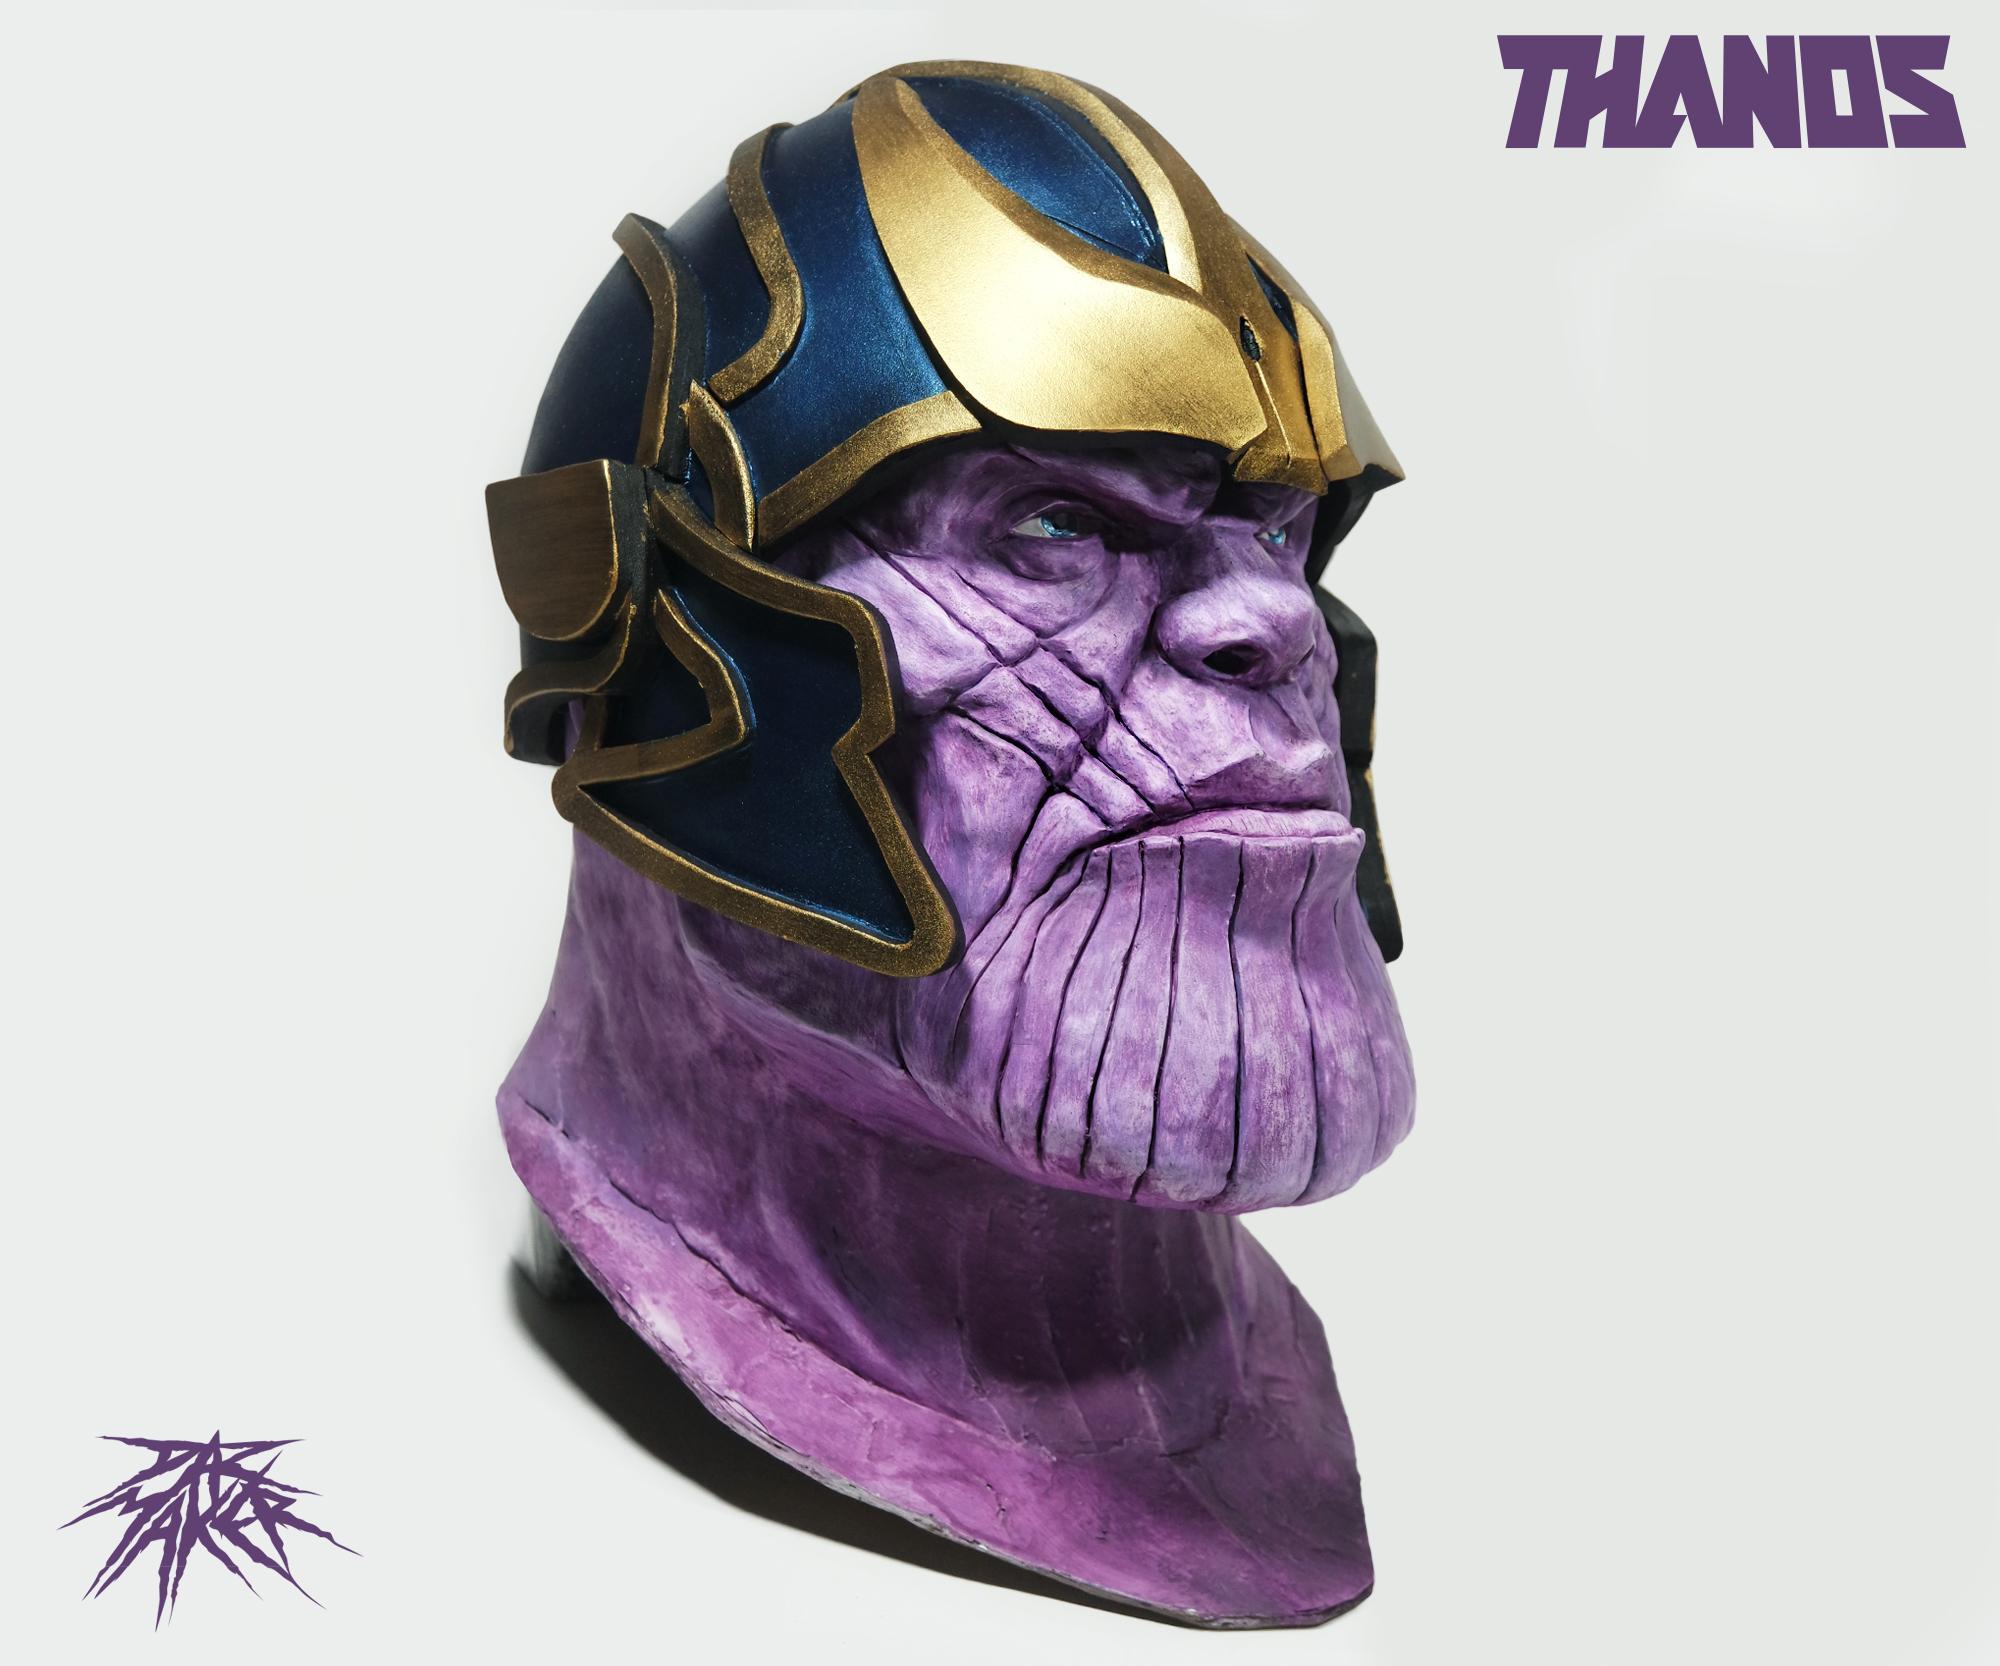 Thanos GOTG Mask and Helmet.